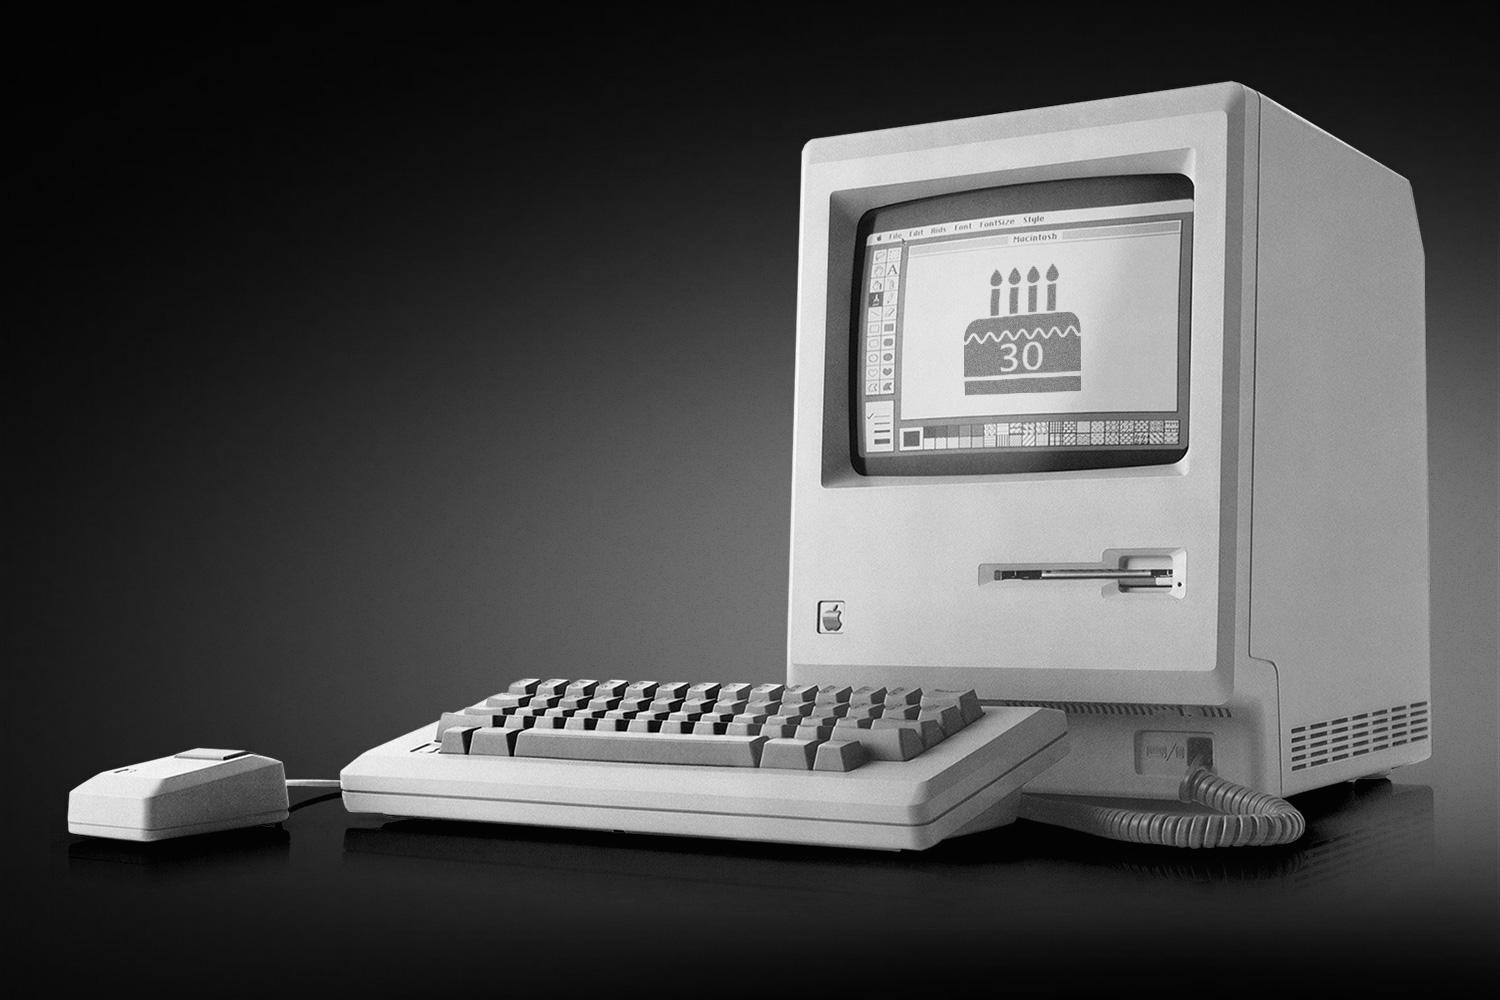 First apple. Компьютер Apple Macintosh (1984). Первые компьютеры Эппл макинтош. Эппл макинтош 1984. Apple компьютеров Macintosh (1984 г)..